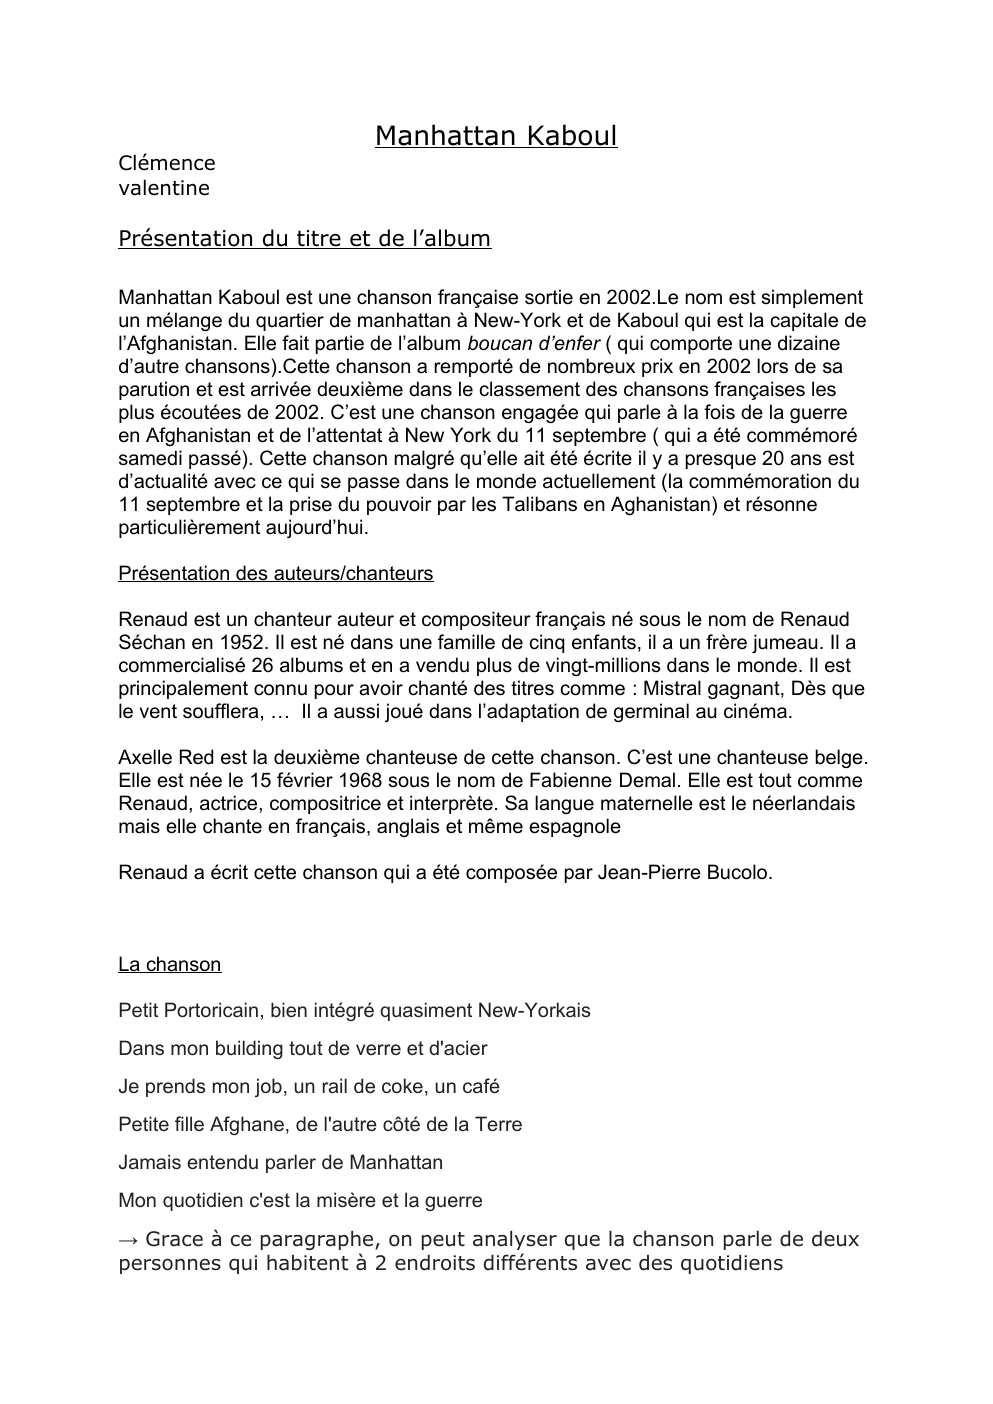 Prévisualisation du document analyse manhattan kaboul